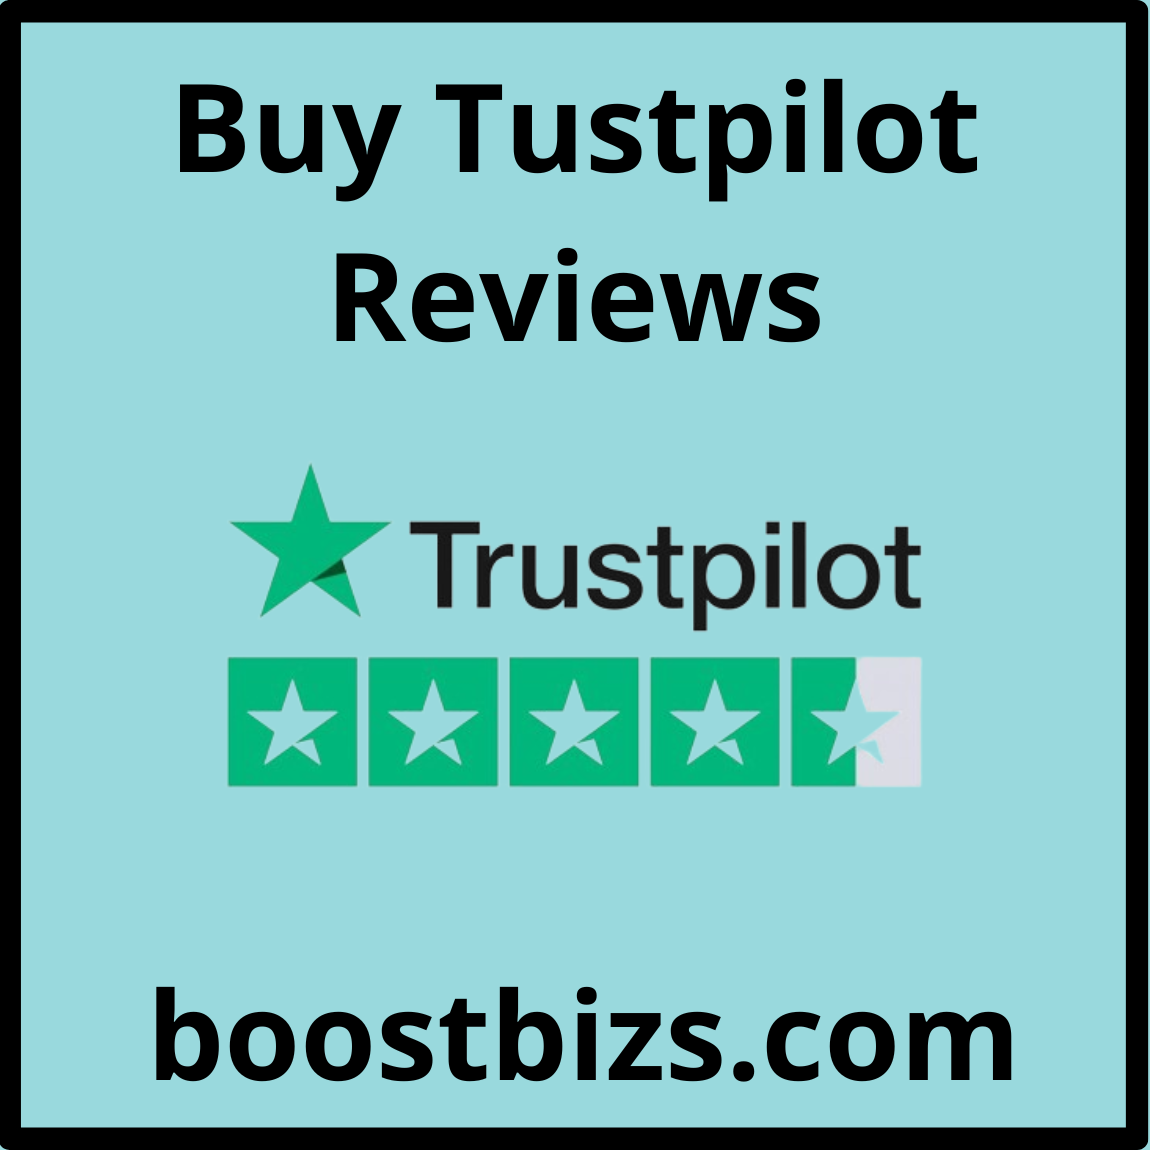 Buy Trustpilot Reviews - BOOSTBIZS